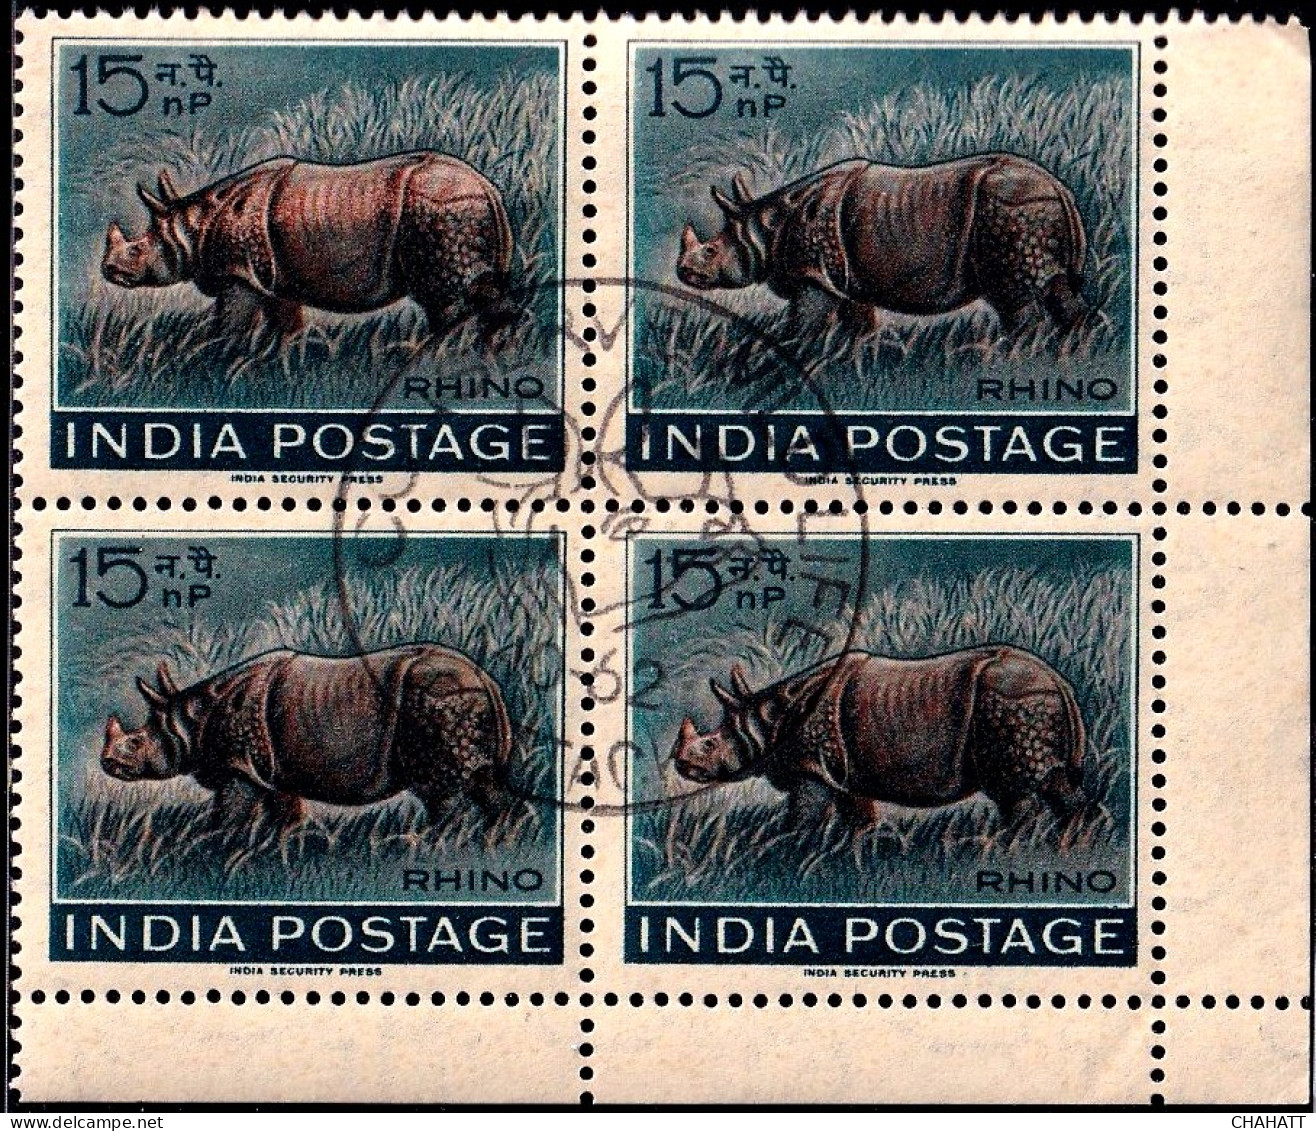 INDIA-1962- WILDLIFE WEEK- RHINOCEROS- BLOCK OF 4 WITH PICTORIAL CANCEL- ERROR-DRY PRINT-"BHARAT" OMITTED-MNH-IE-66-3 - Varietà & Curiosità